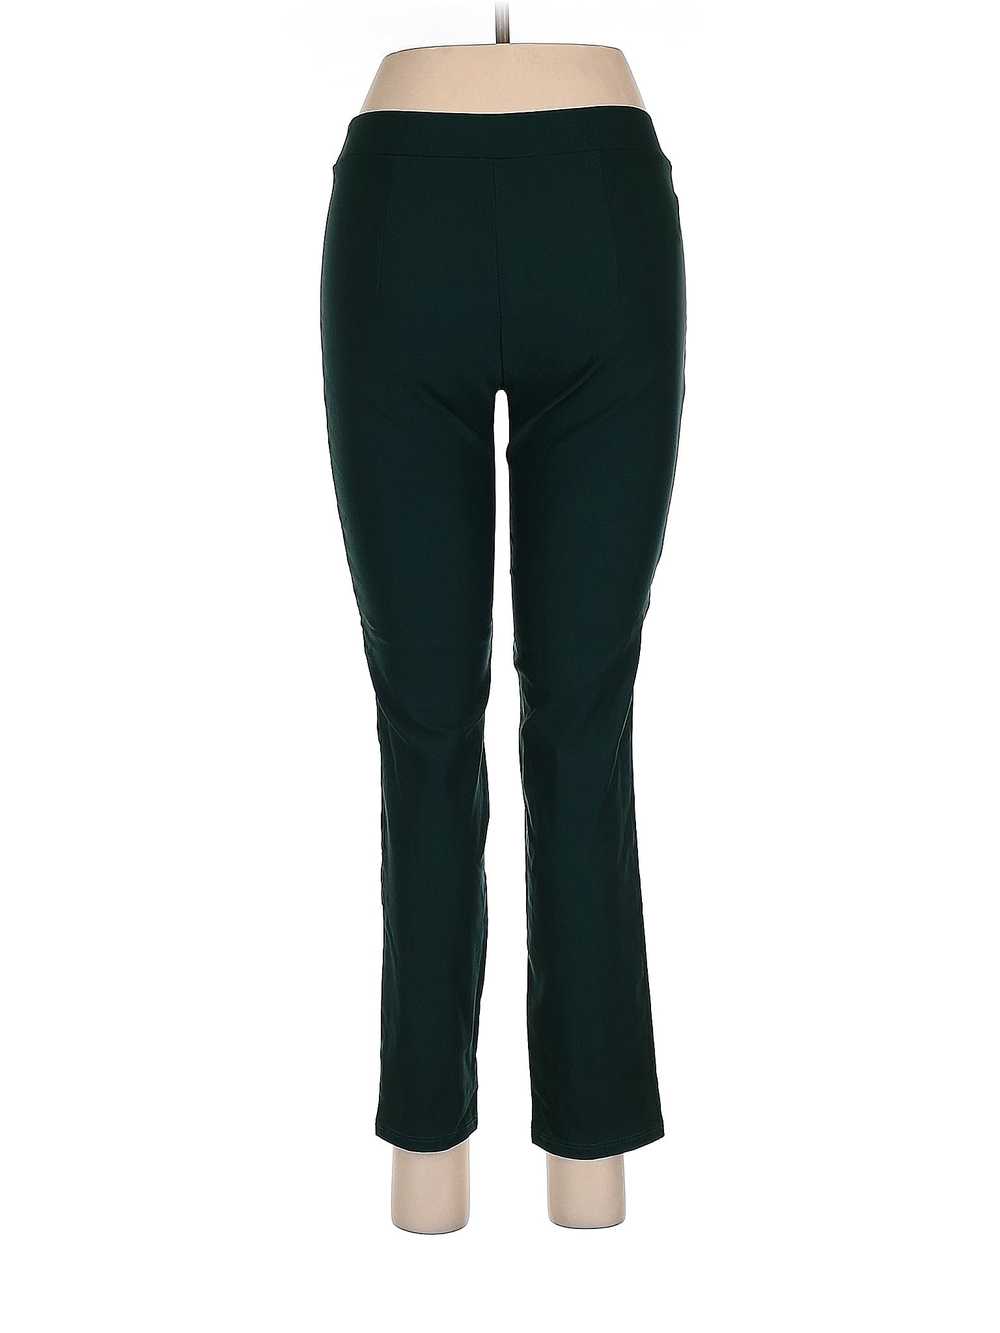 The Vintage Shop Women Green Casual Pants M - image 2